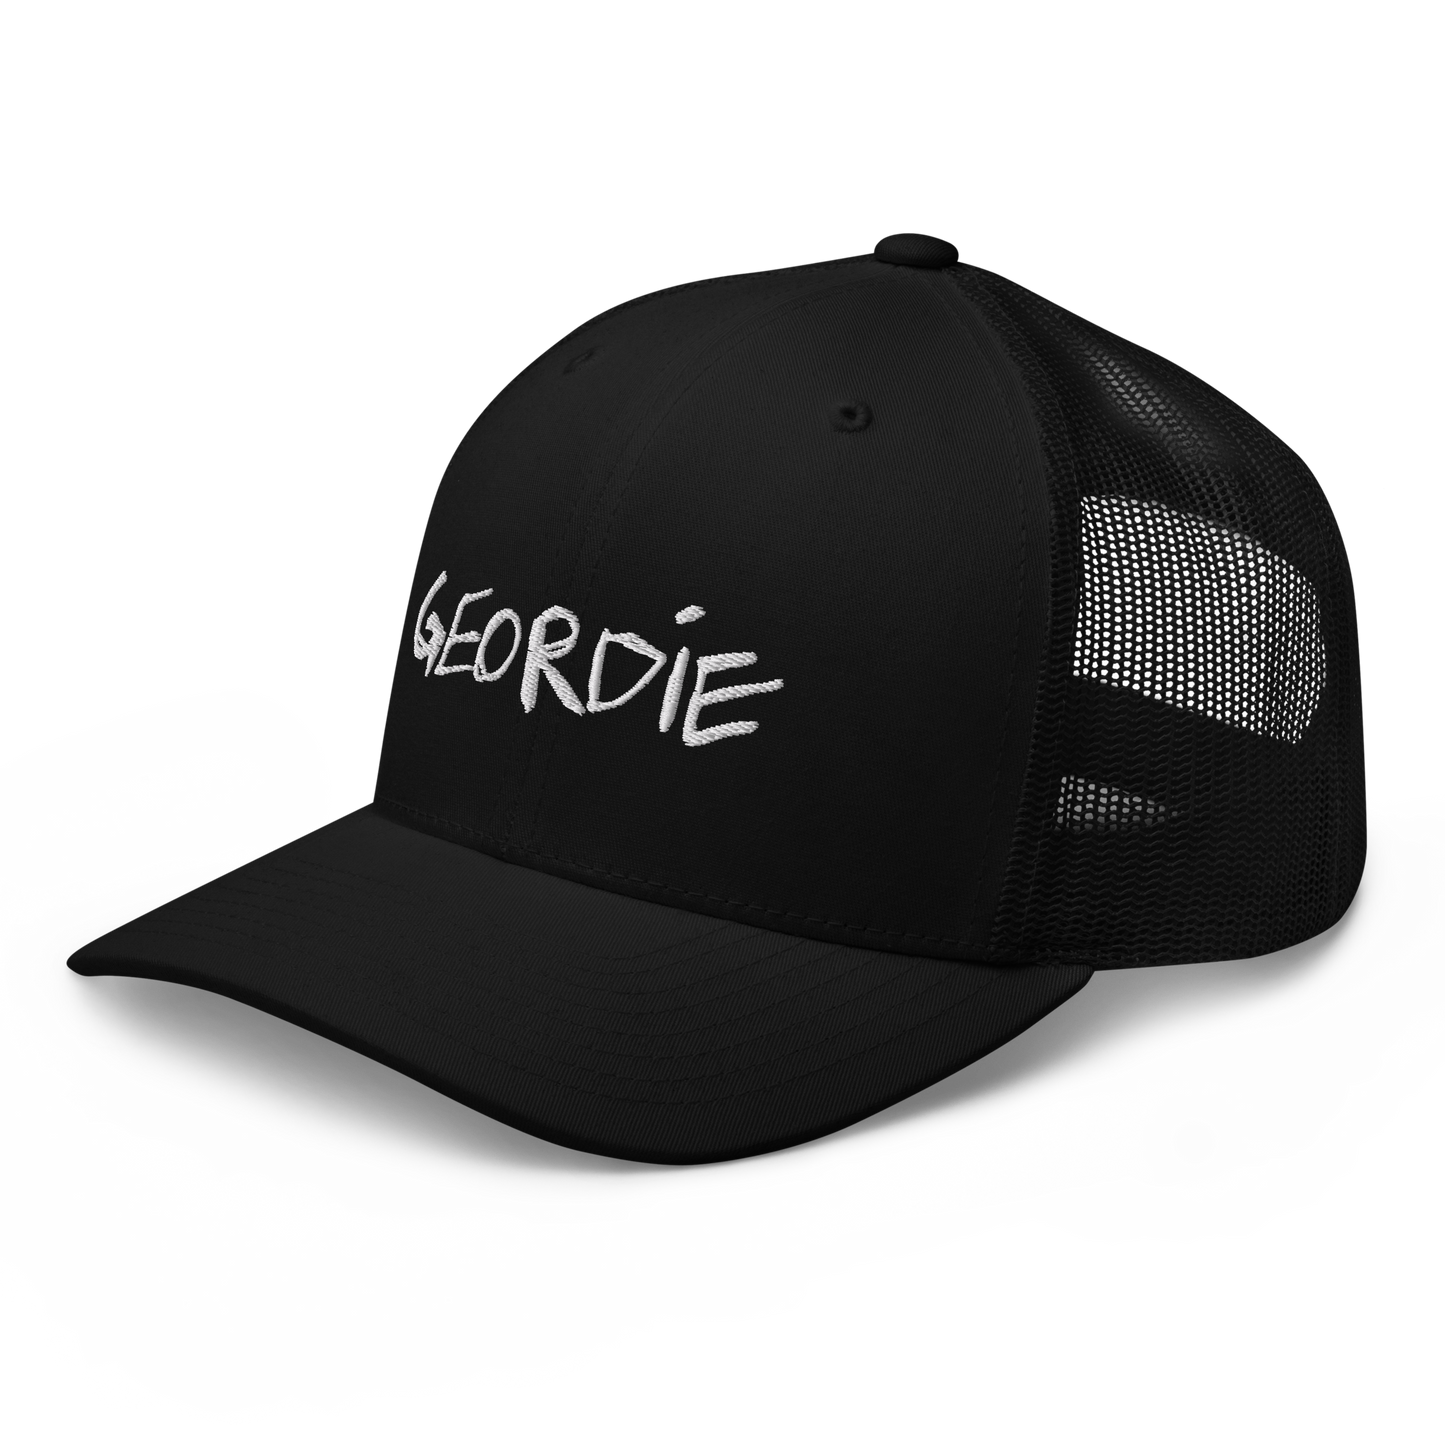 Limited Edition Geordie Trucker Hat